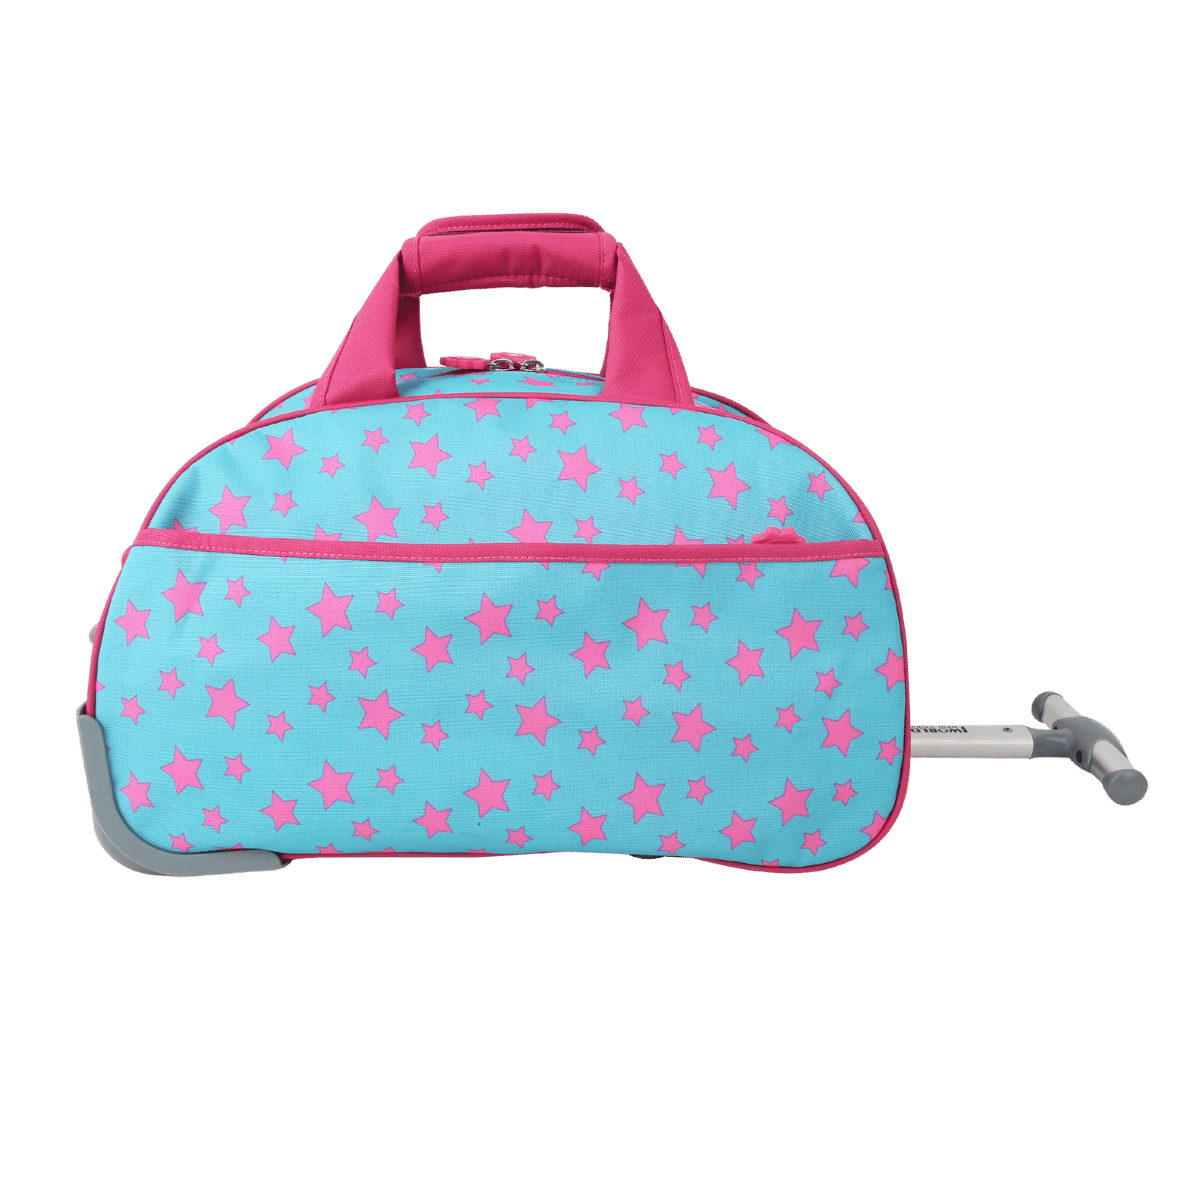 J World Girls Kids travel Duffle Bag with Wheels Carry-on Luggage, Unicorn  - Walmart.com